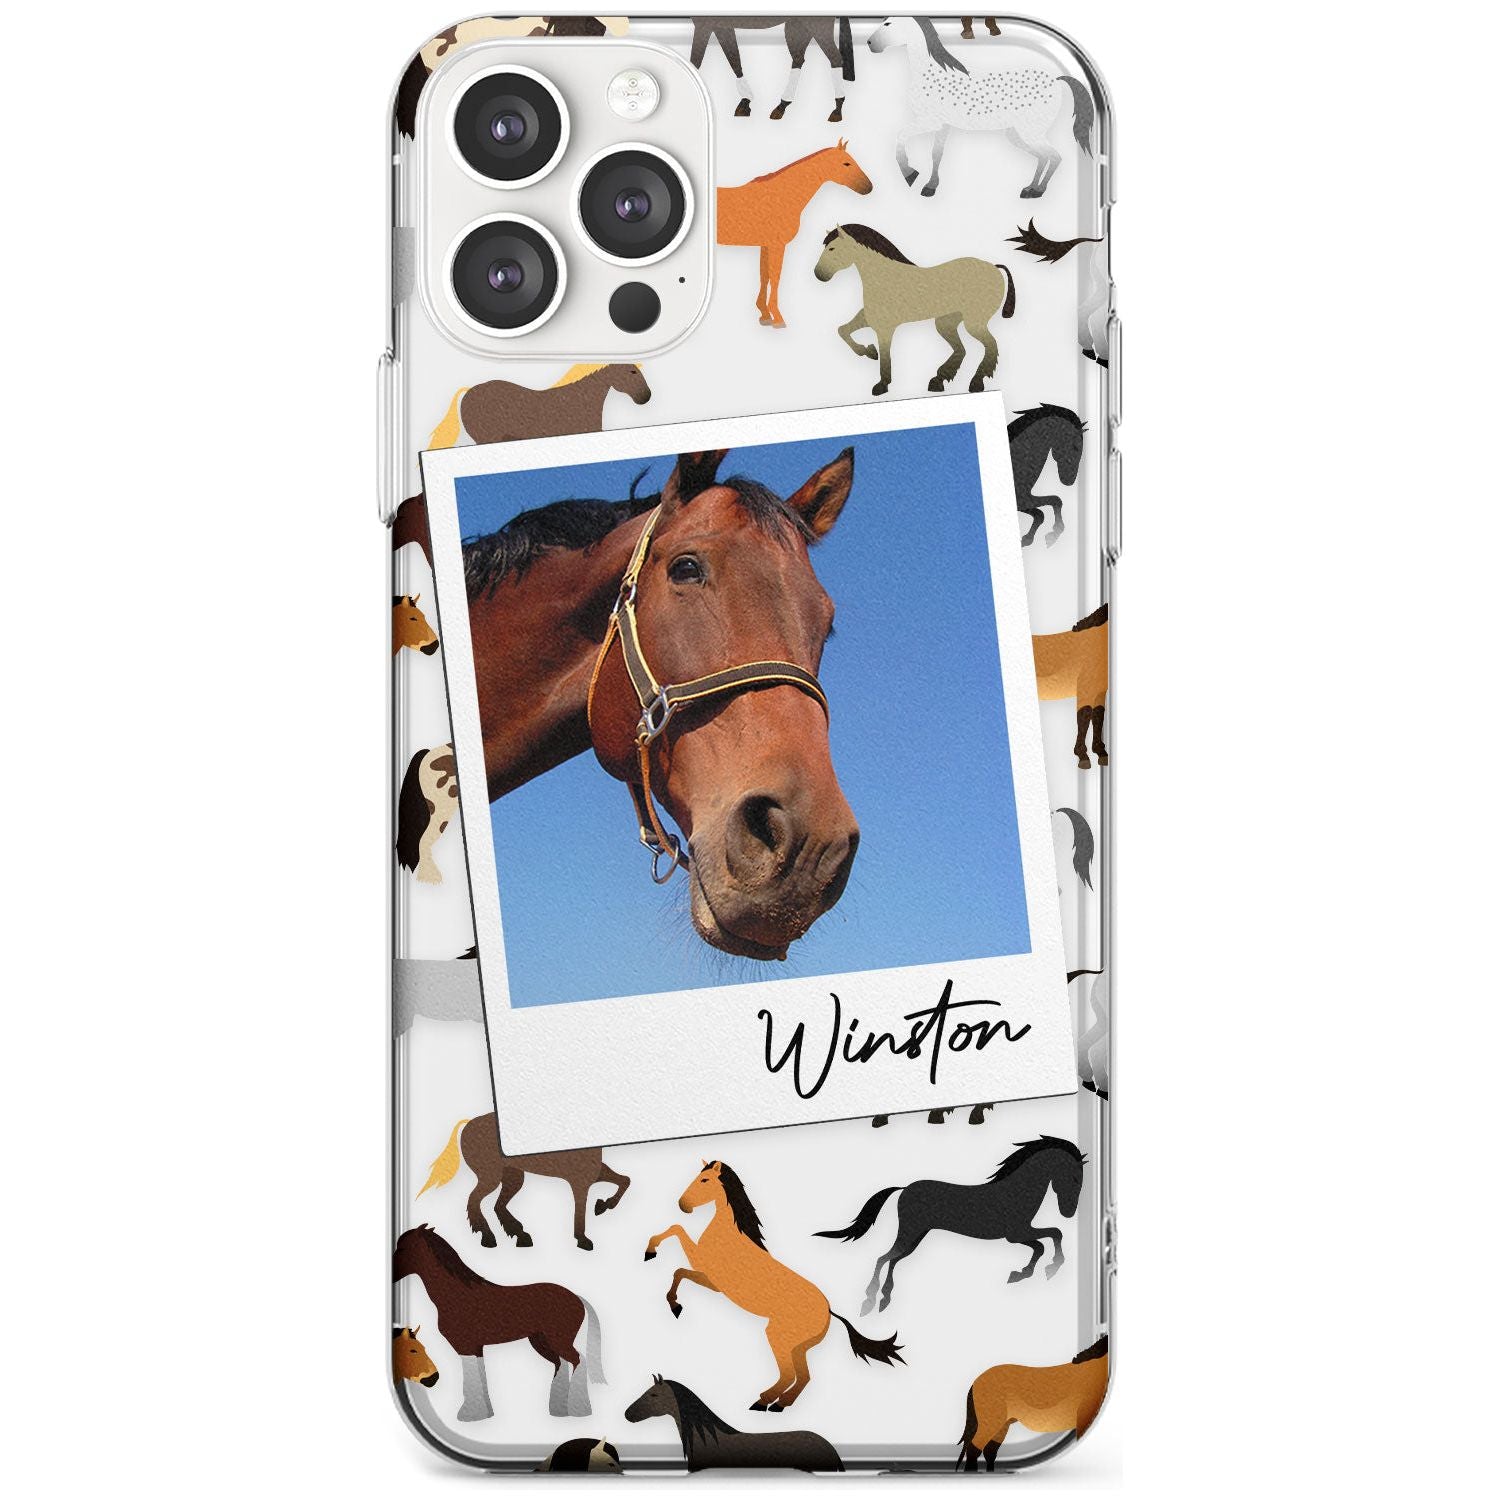 Personalised Horse Polaroid Slim TPU Phone Case for iPhone 11 Pro Max